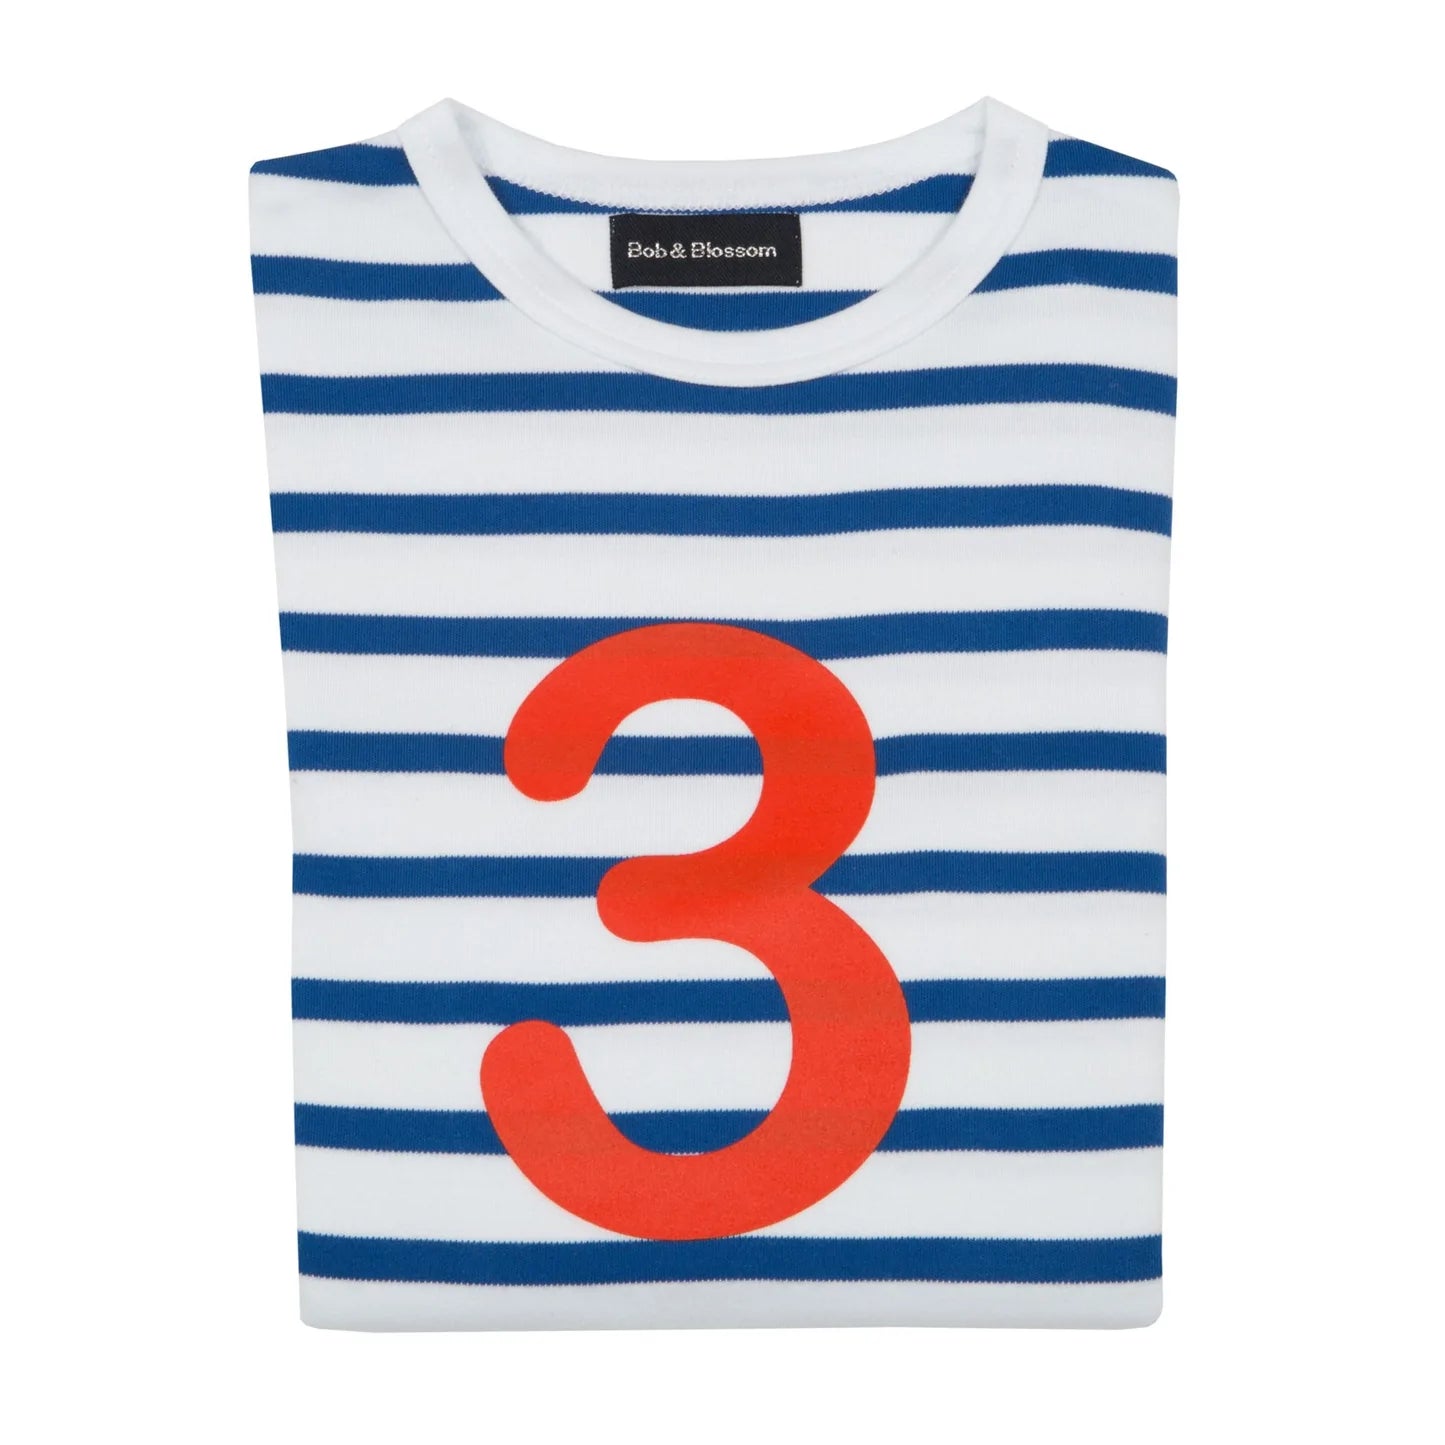 Bob & Blossom French Blue & White Stripe Number T-shirt